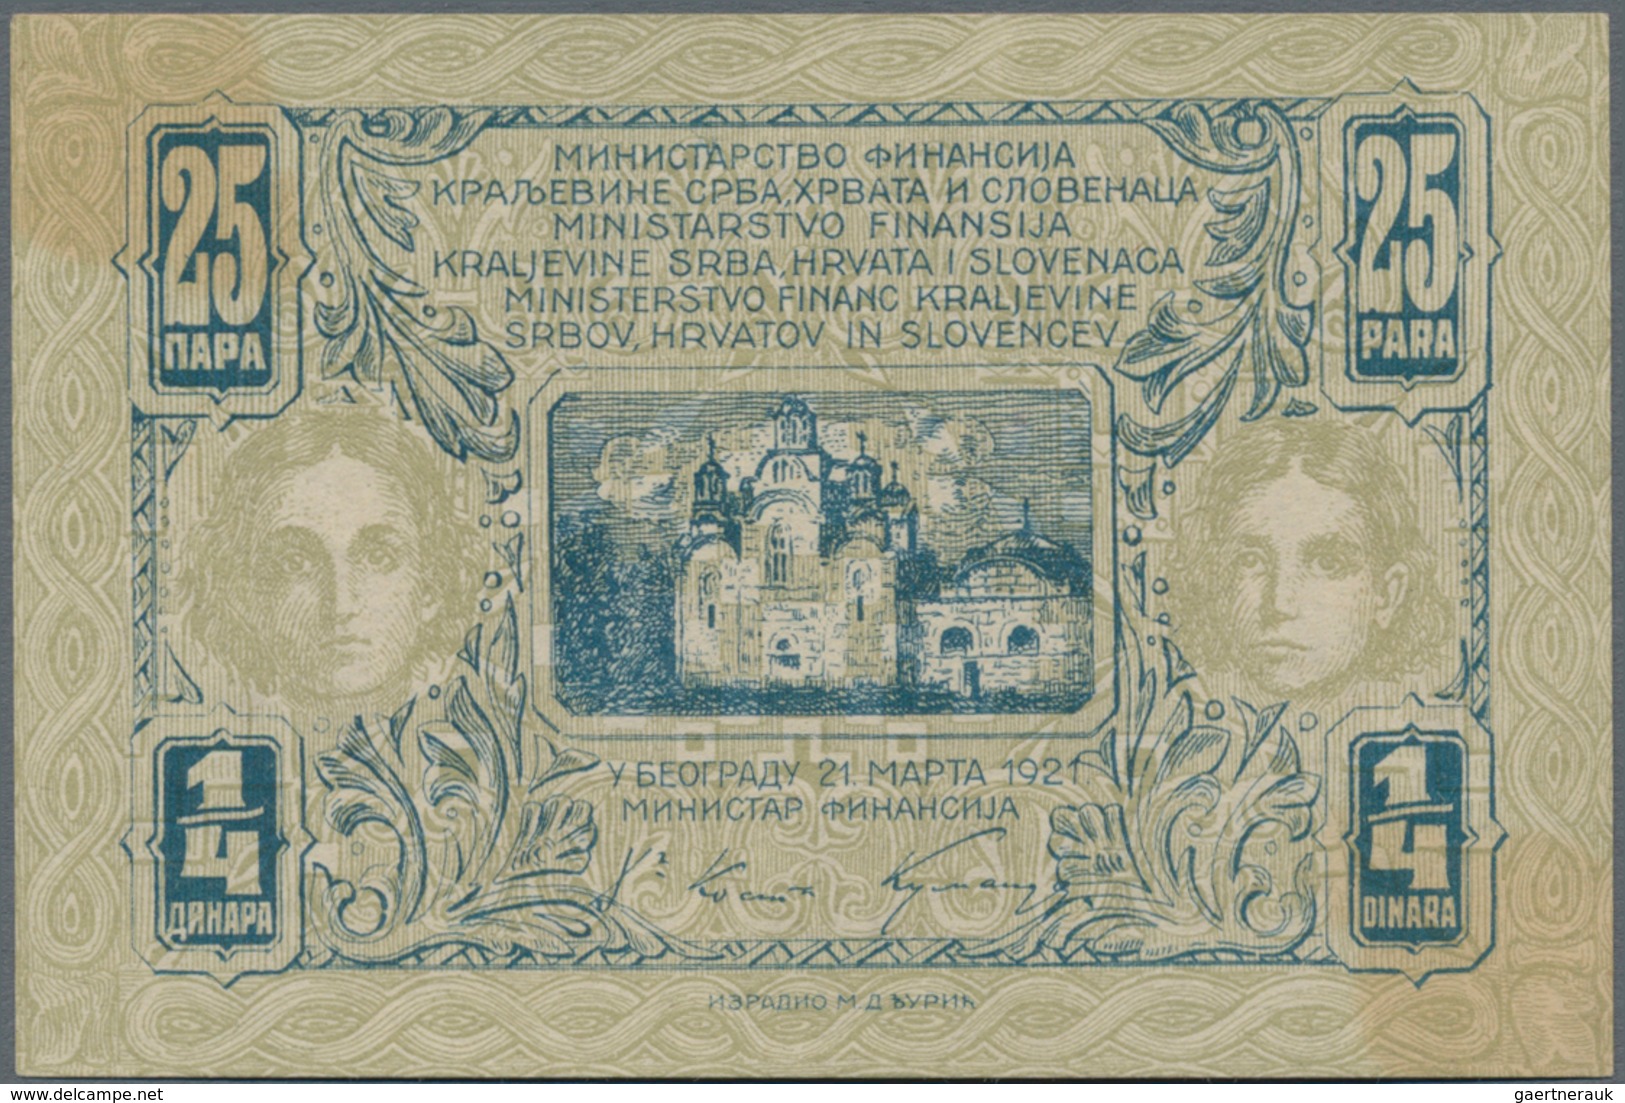 Yugoslavia / Jugoslavien: Kingdom of Serbs, Croats & Slovenes – Ministry of Finance, set with 9 bank